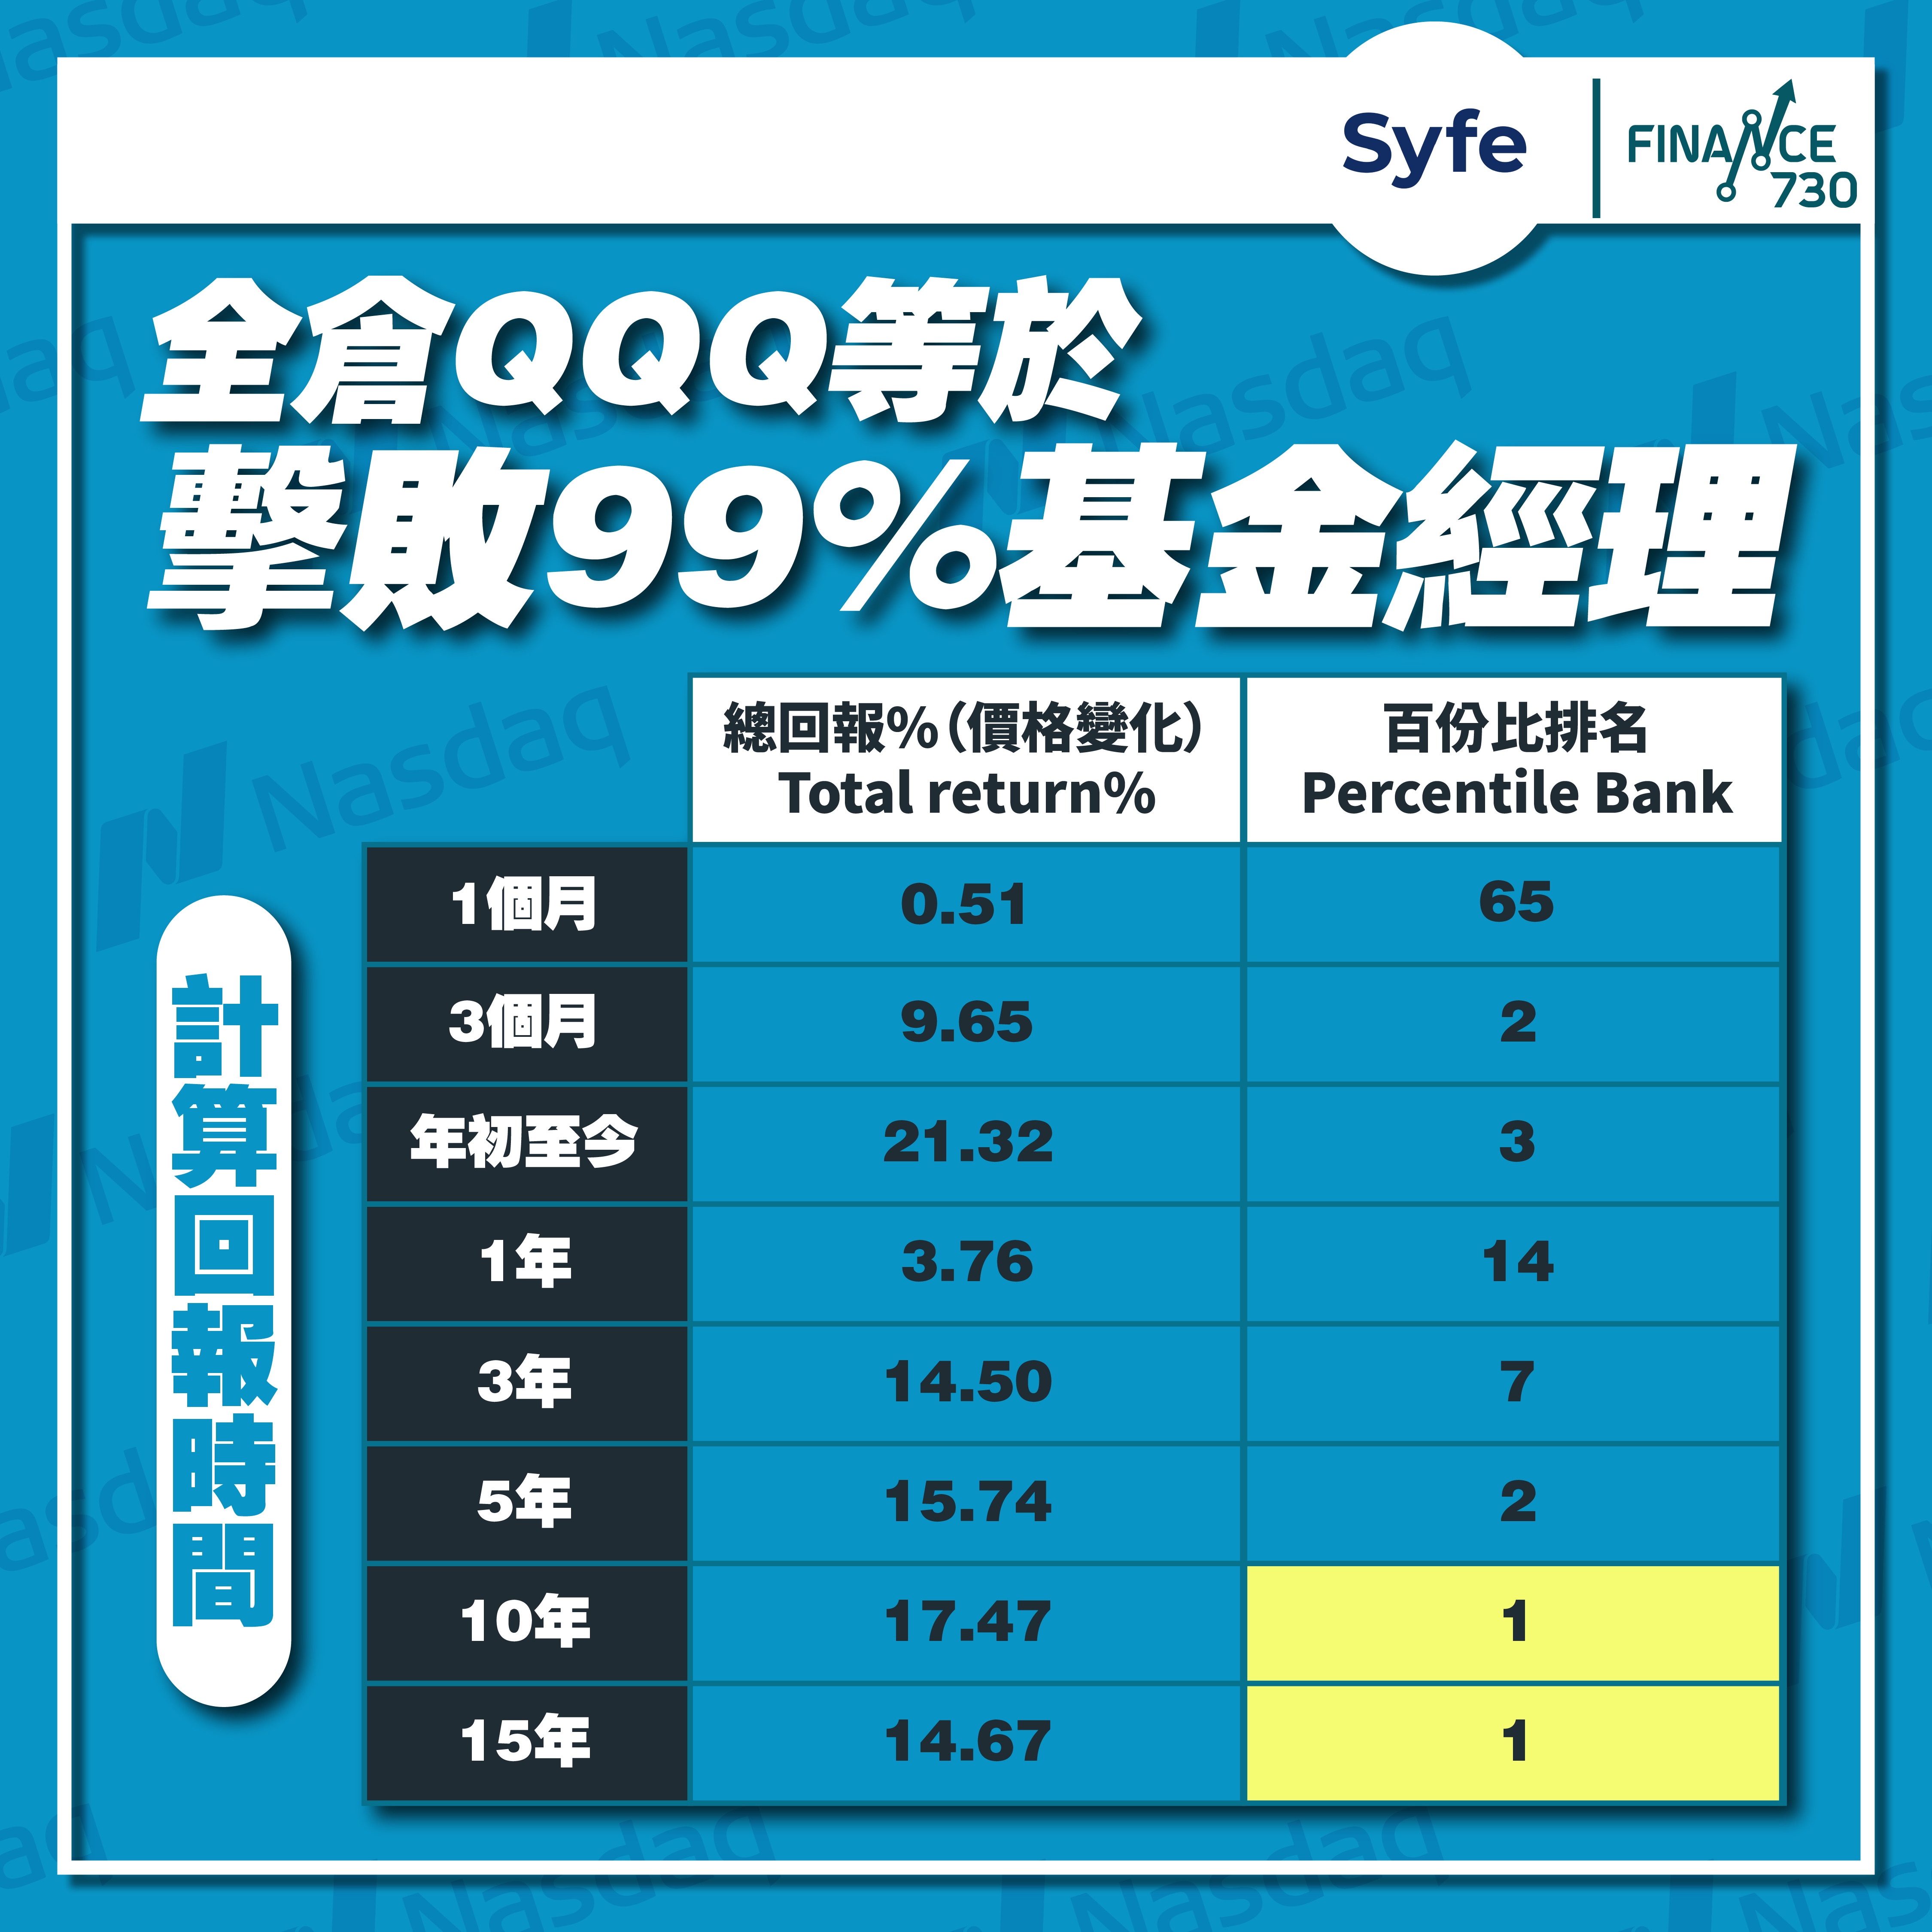 QQQ-美股-ETF-投資-被動-長線-基金經理-Sfye